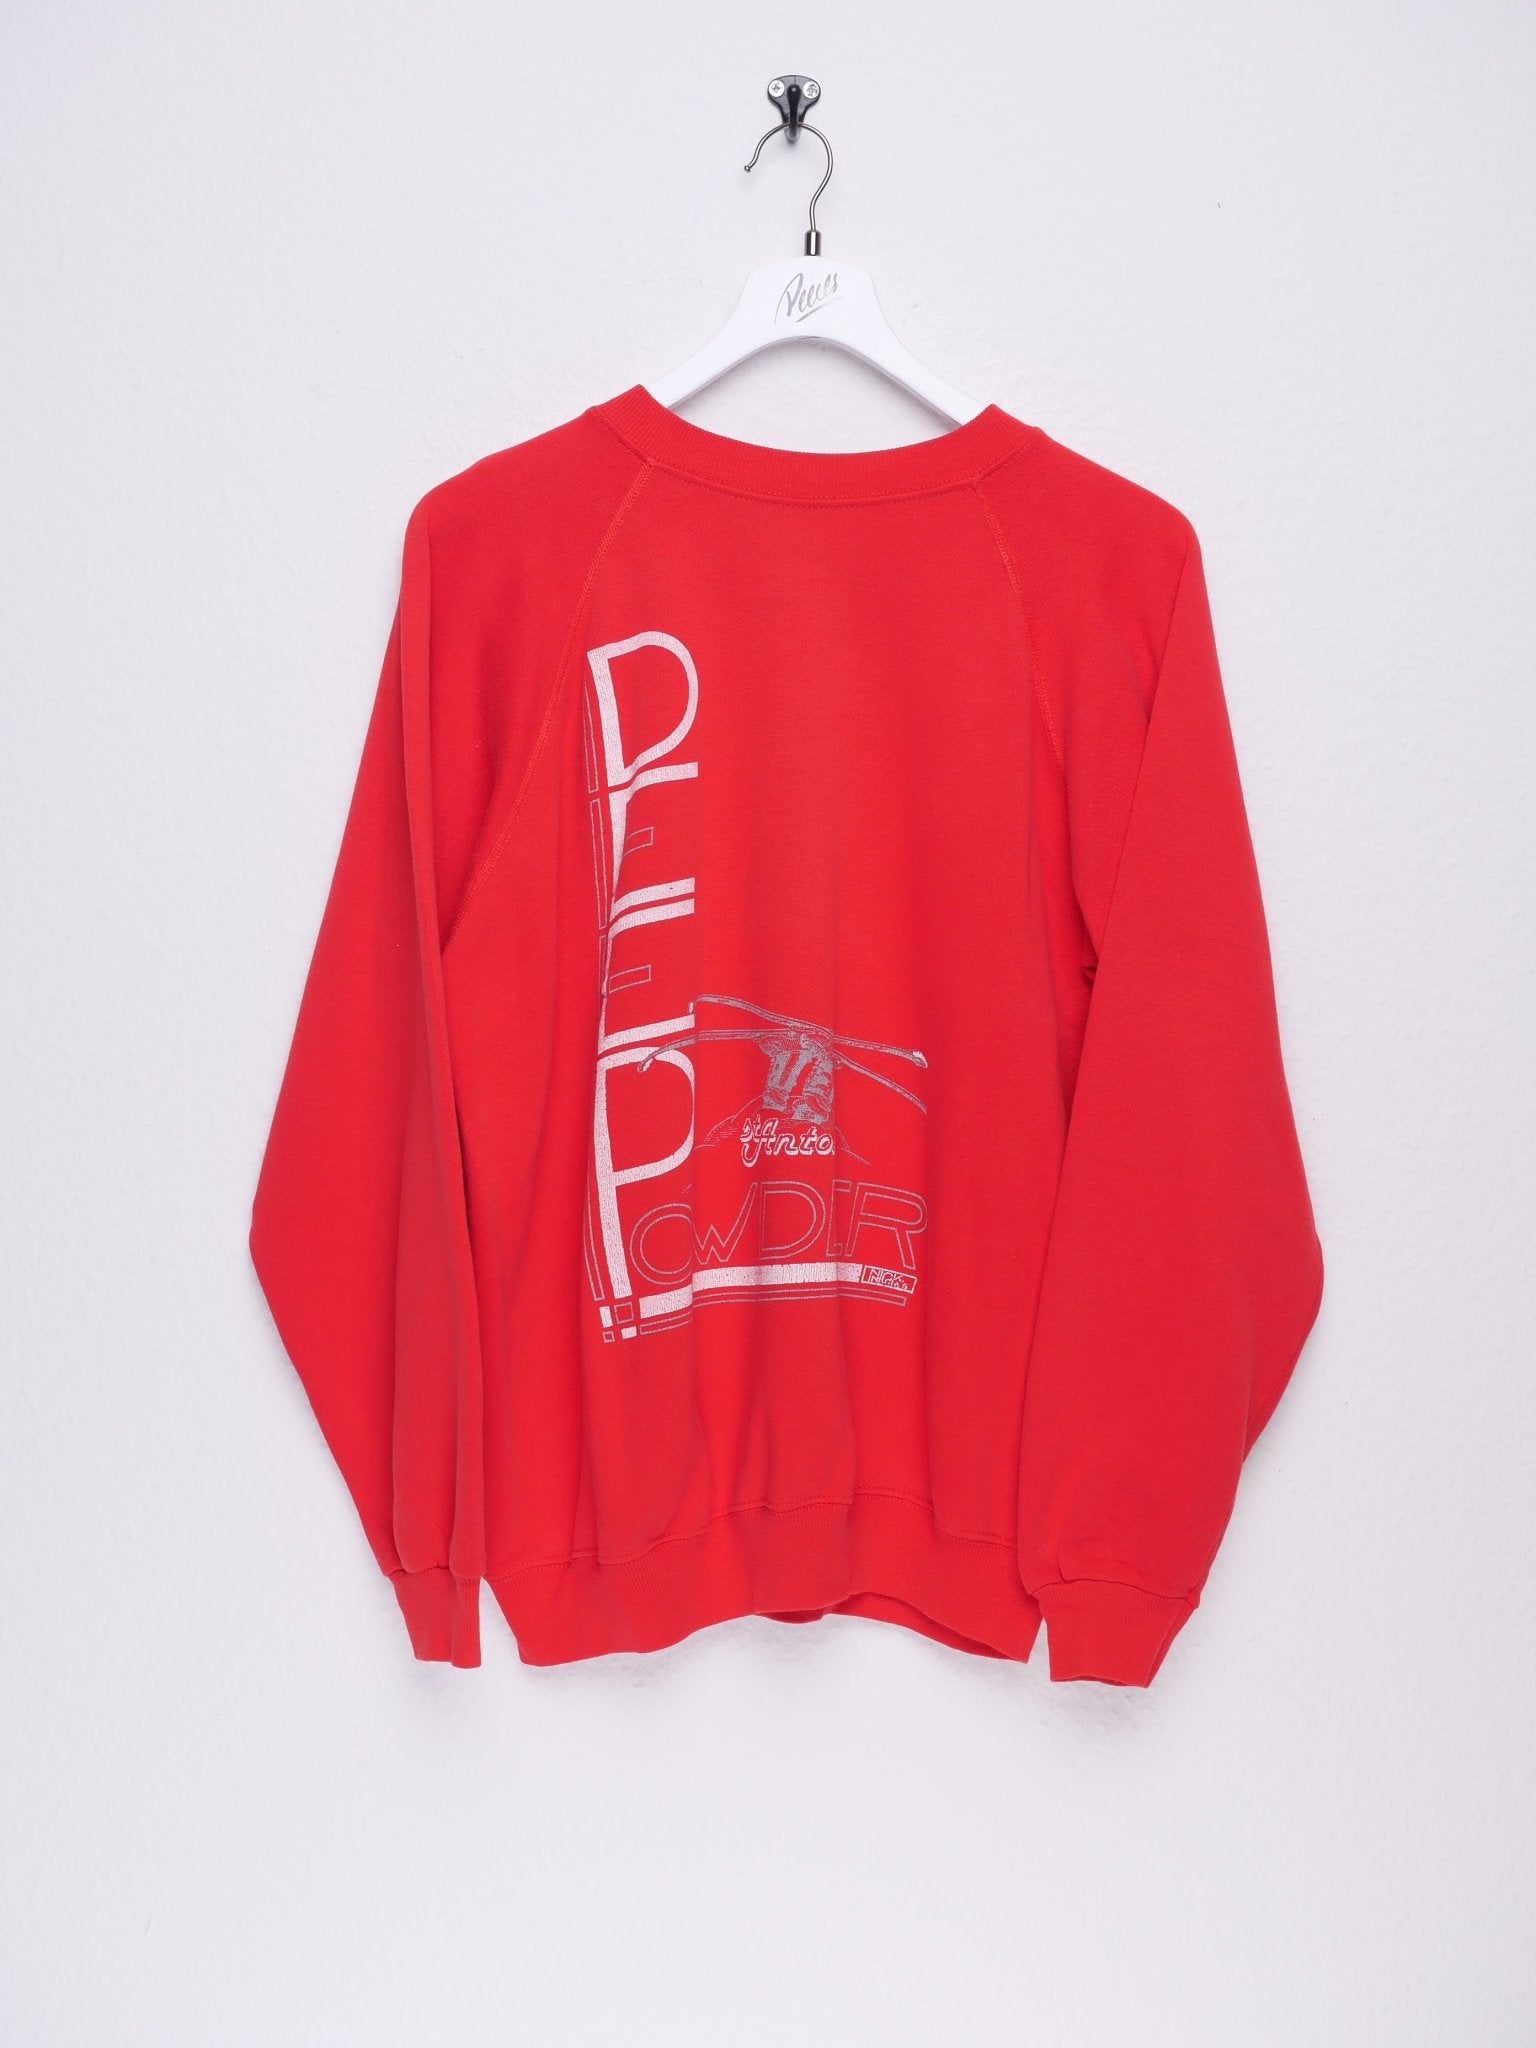 'Peep Powder' printed Graphic red Sweater - Peeces